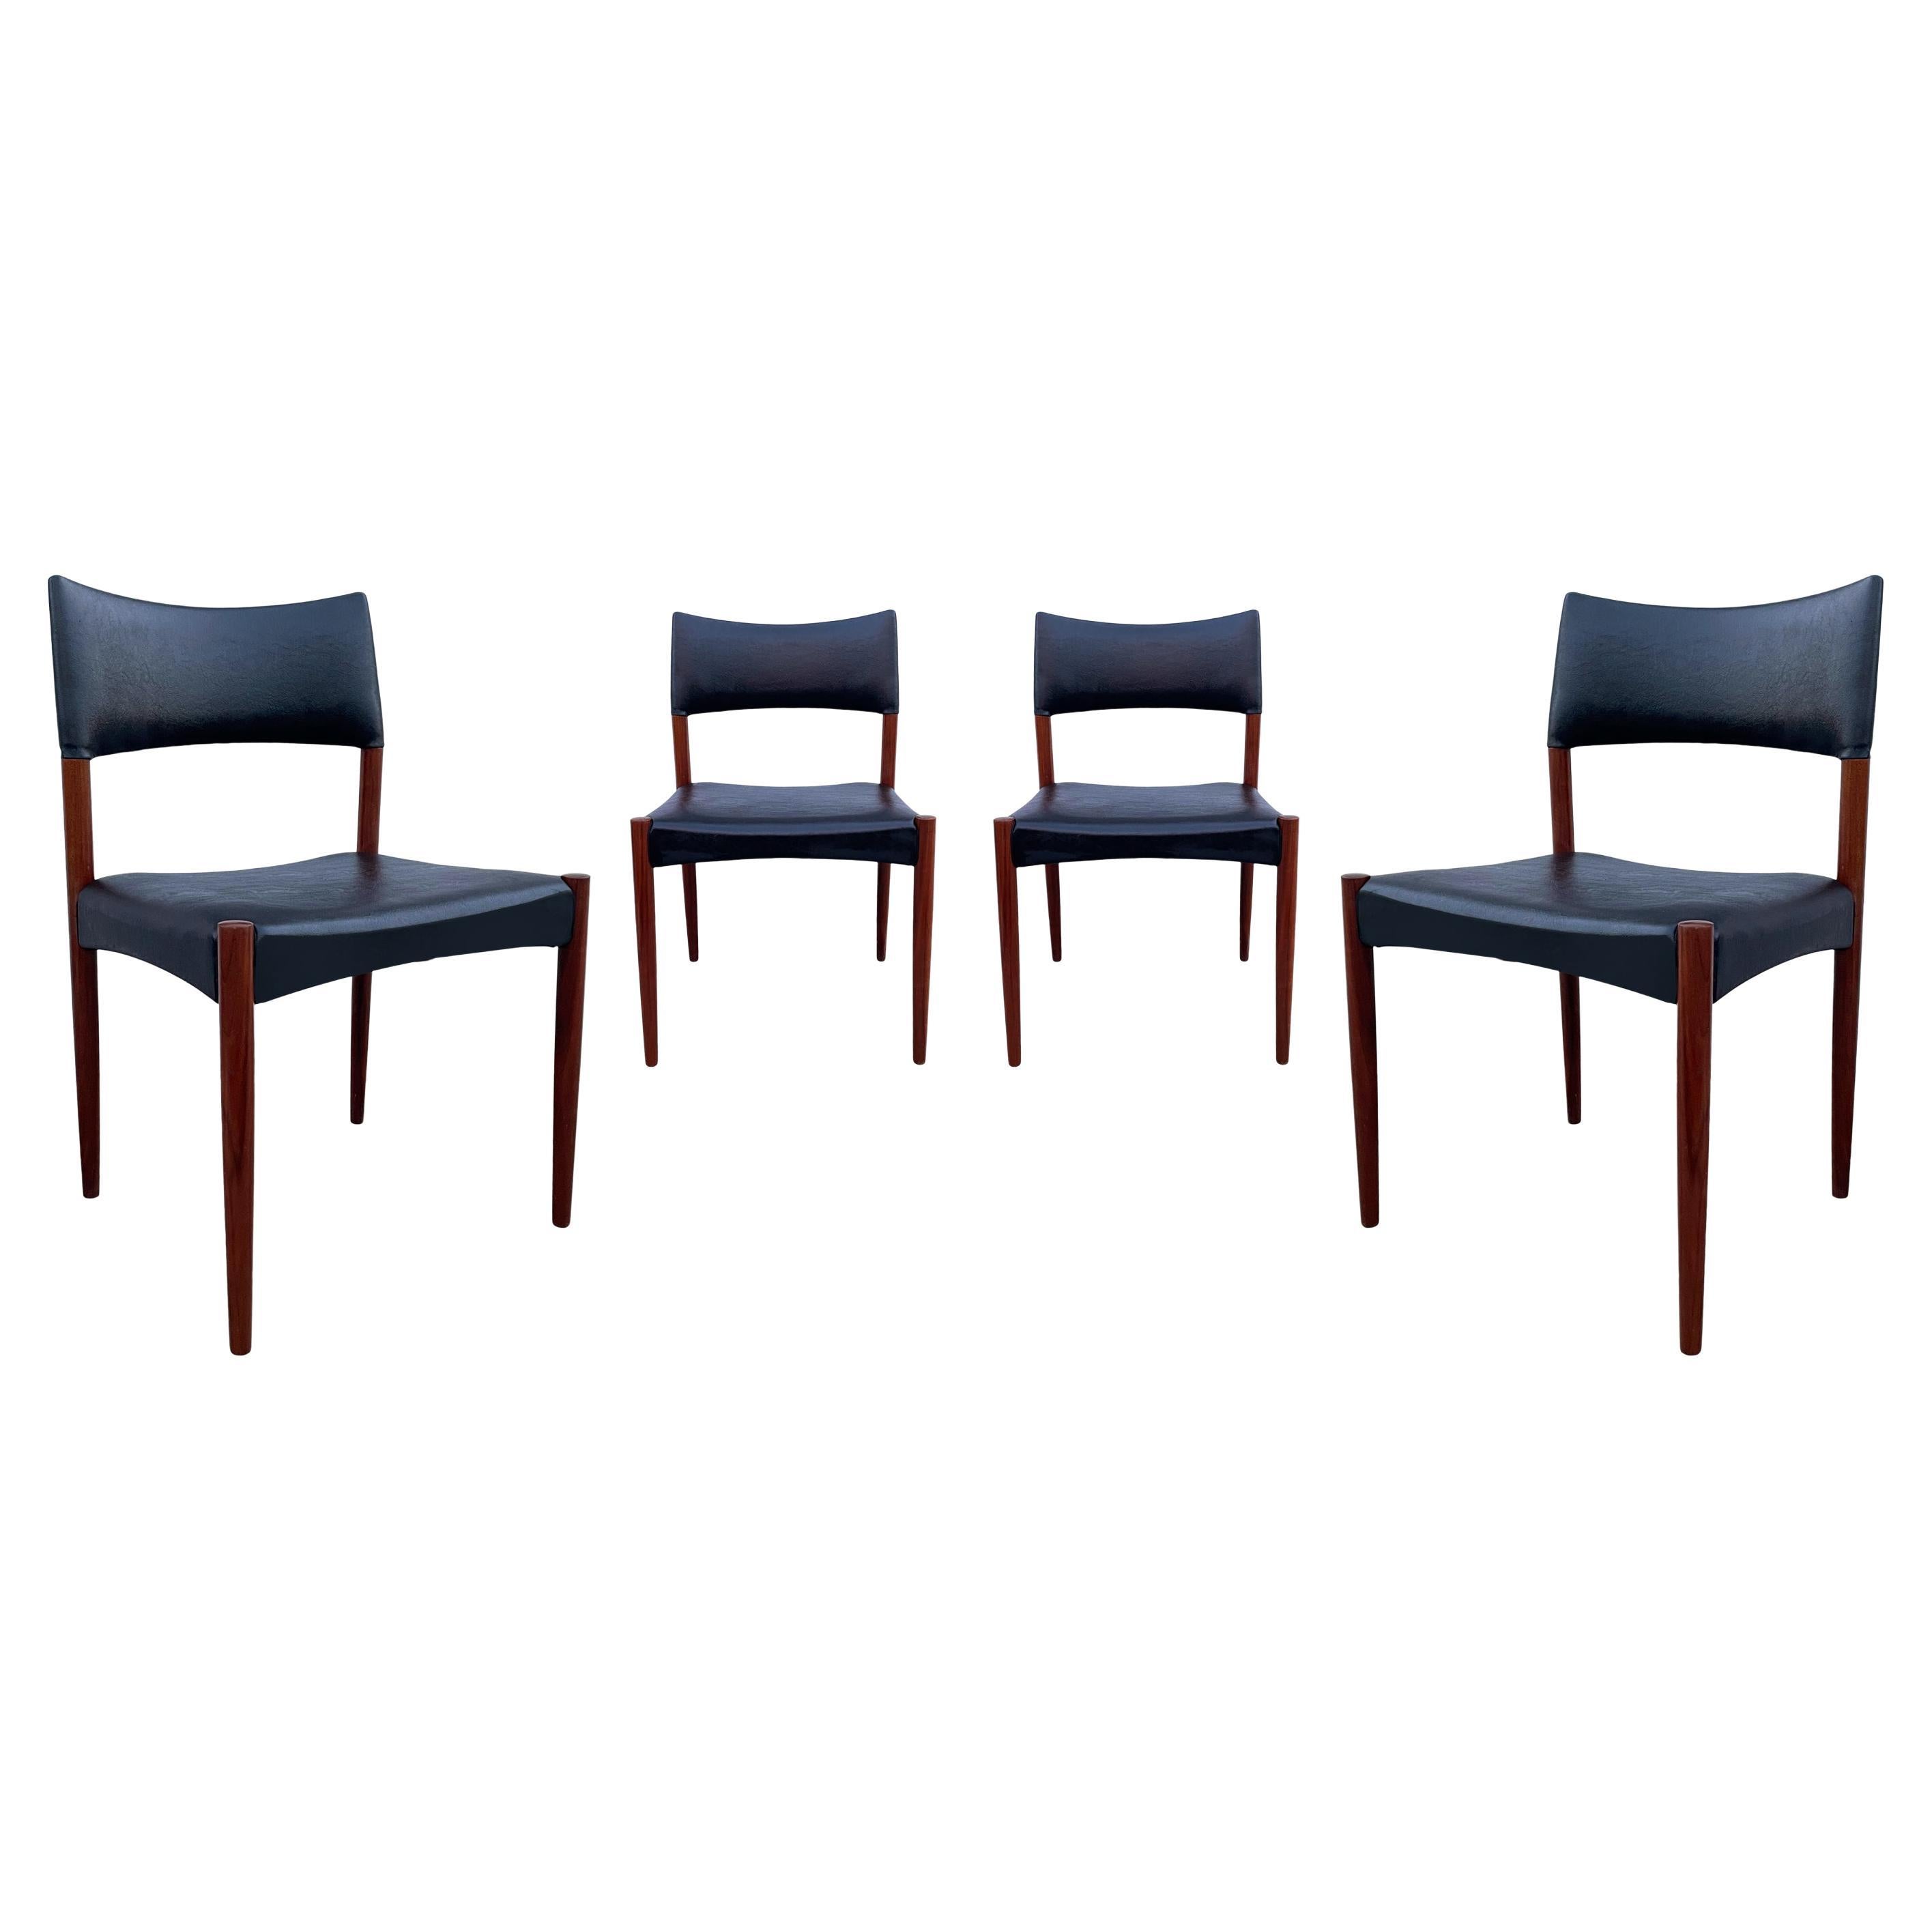 Set of 4 Mid Century Danish Modern Dining Chairs in Teak by Villy Schou Andersen